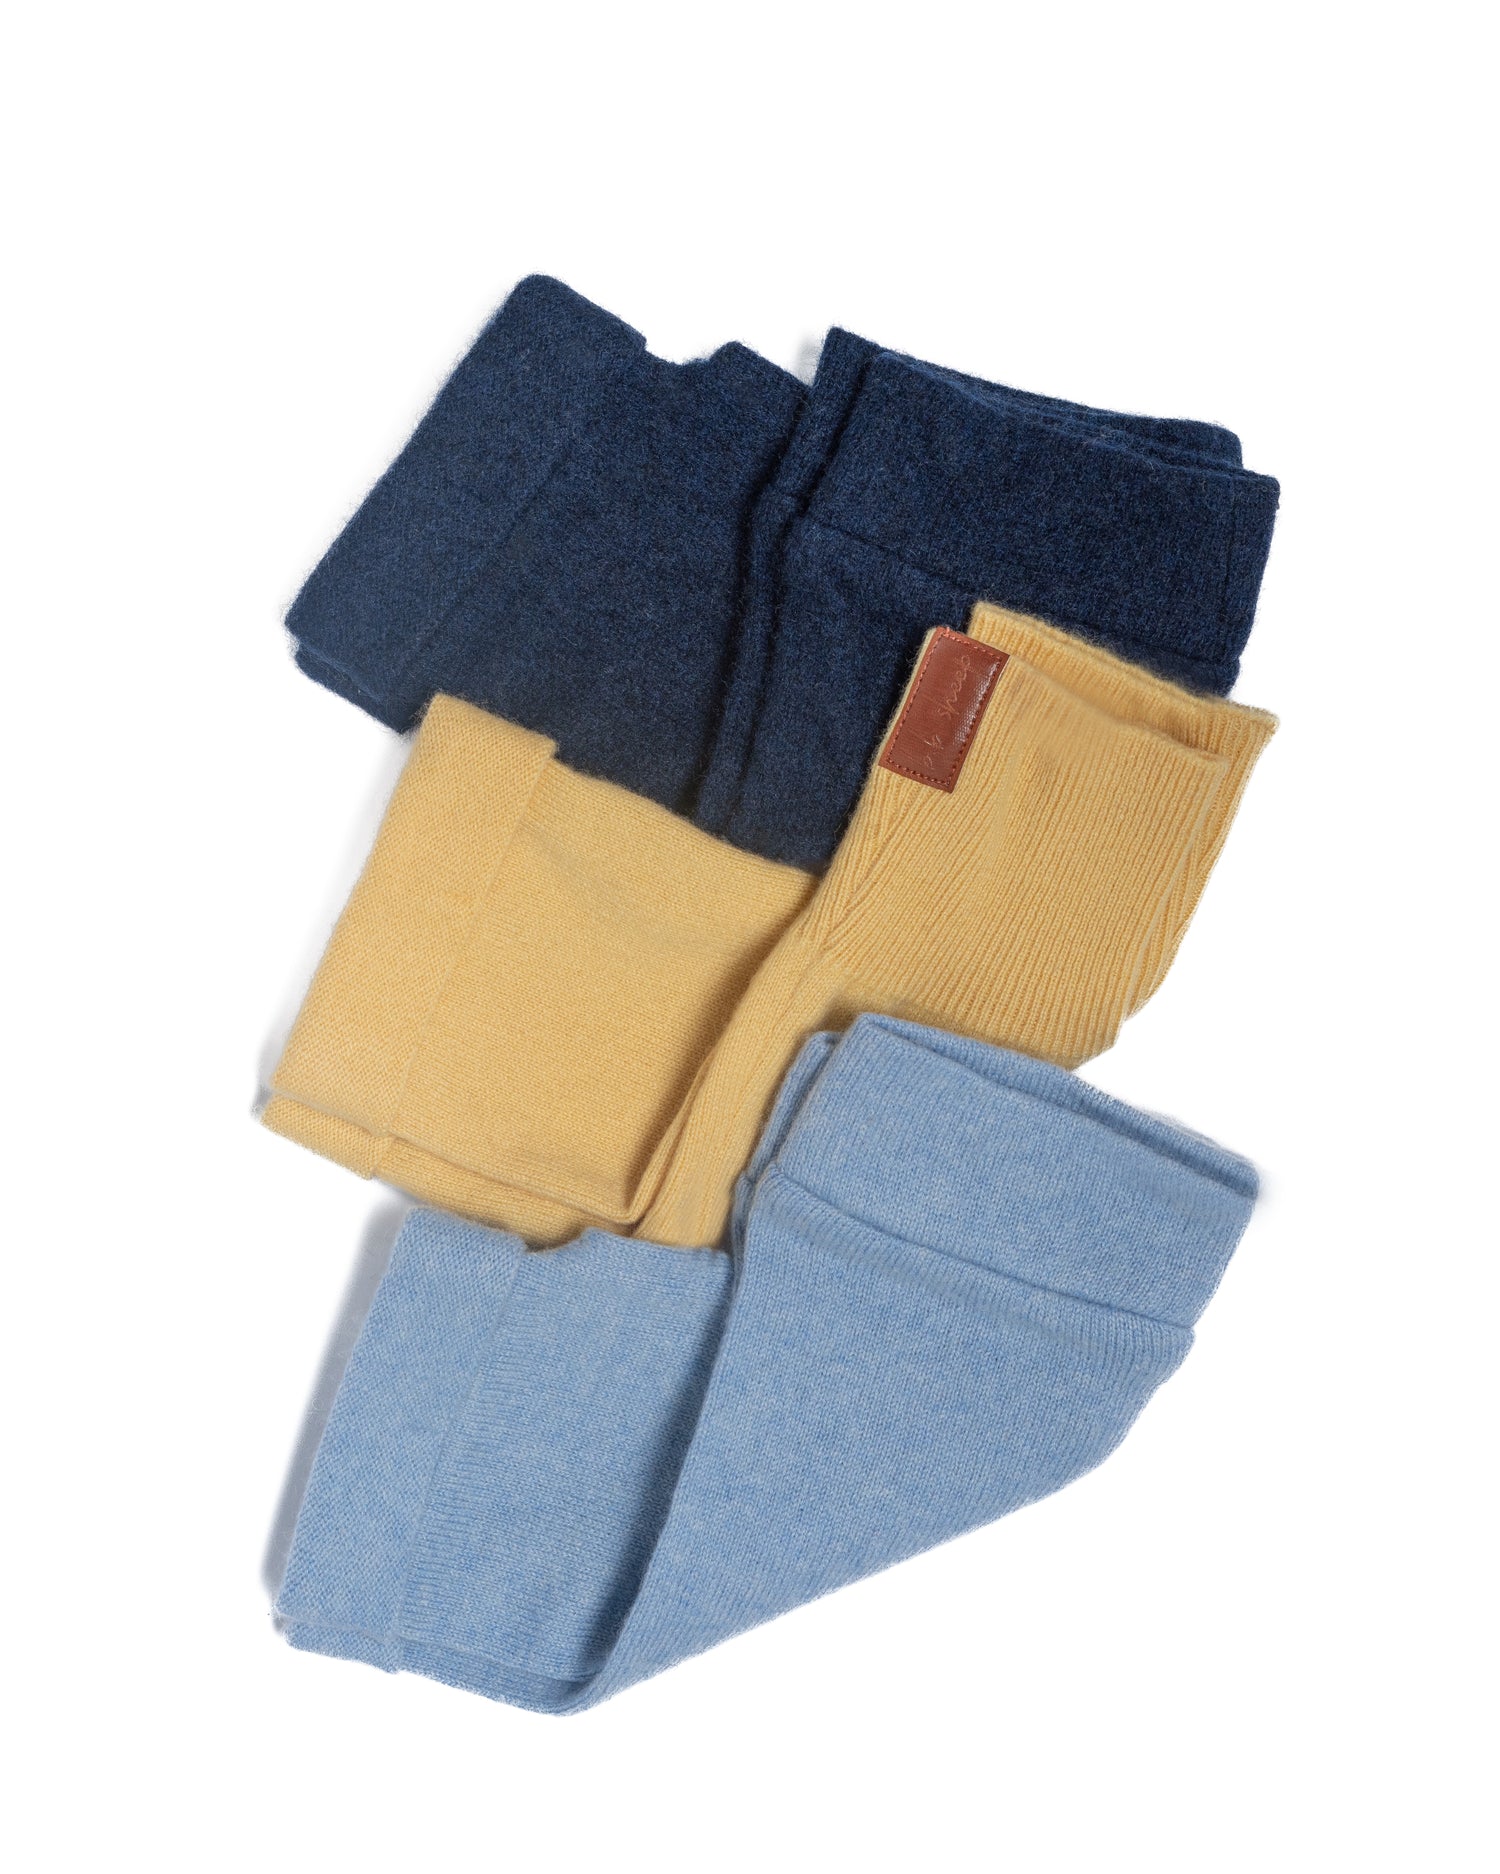 Yellow Duo Fingerless Gloves Set - Denim Blue, Yellow, Baby Blue, Box of 3